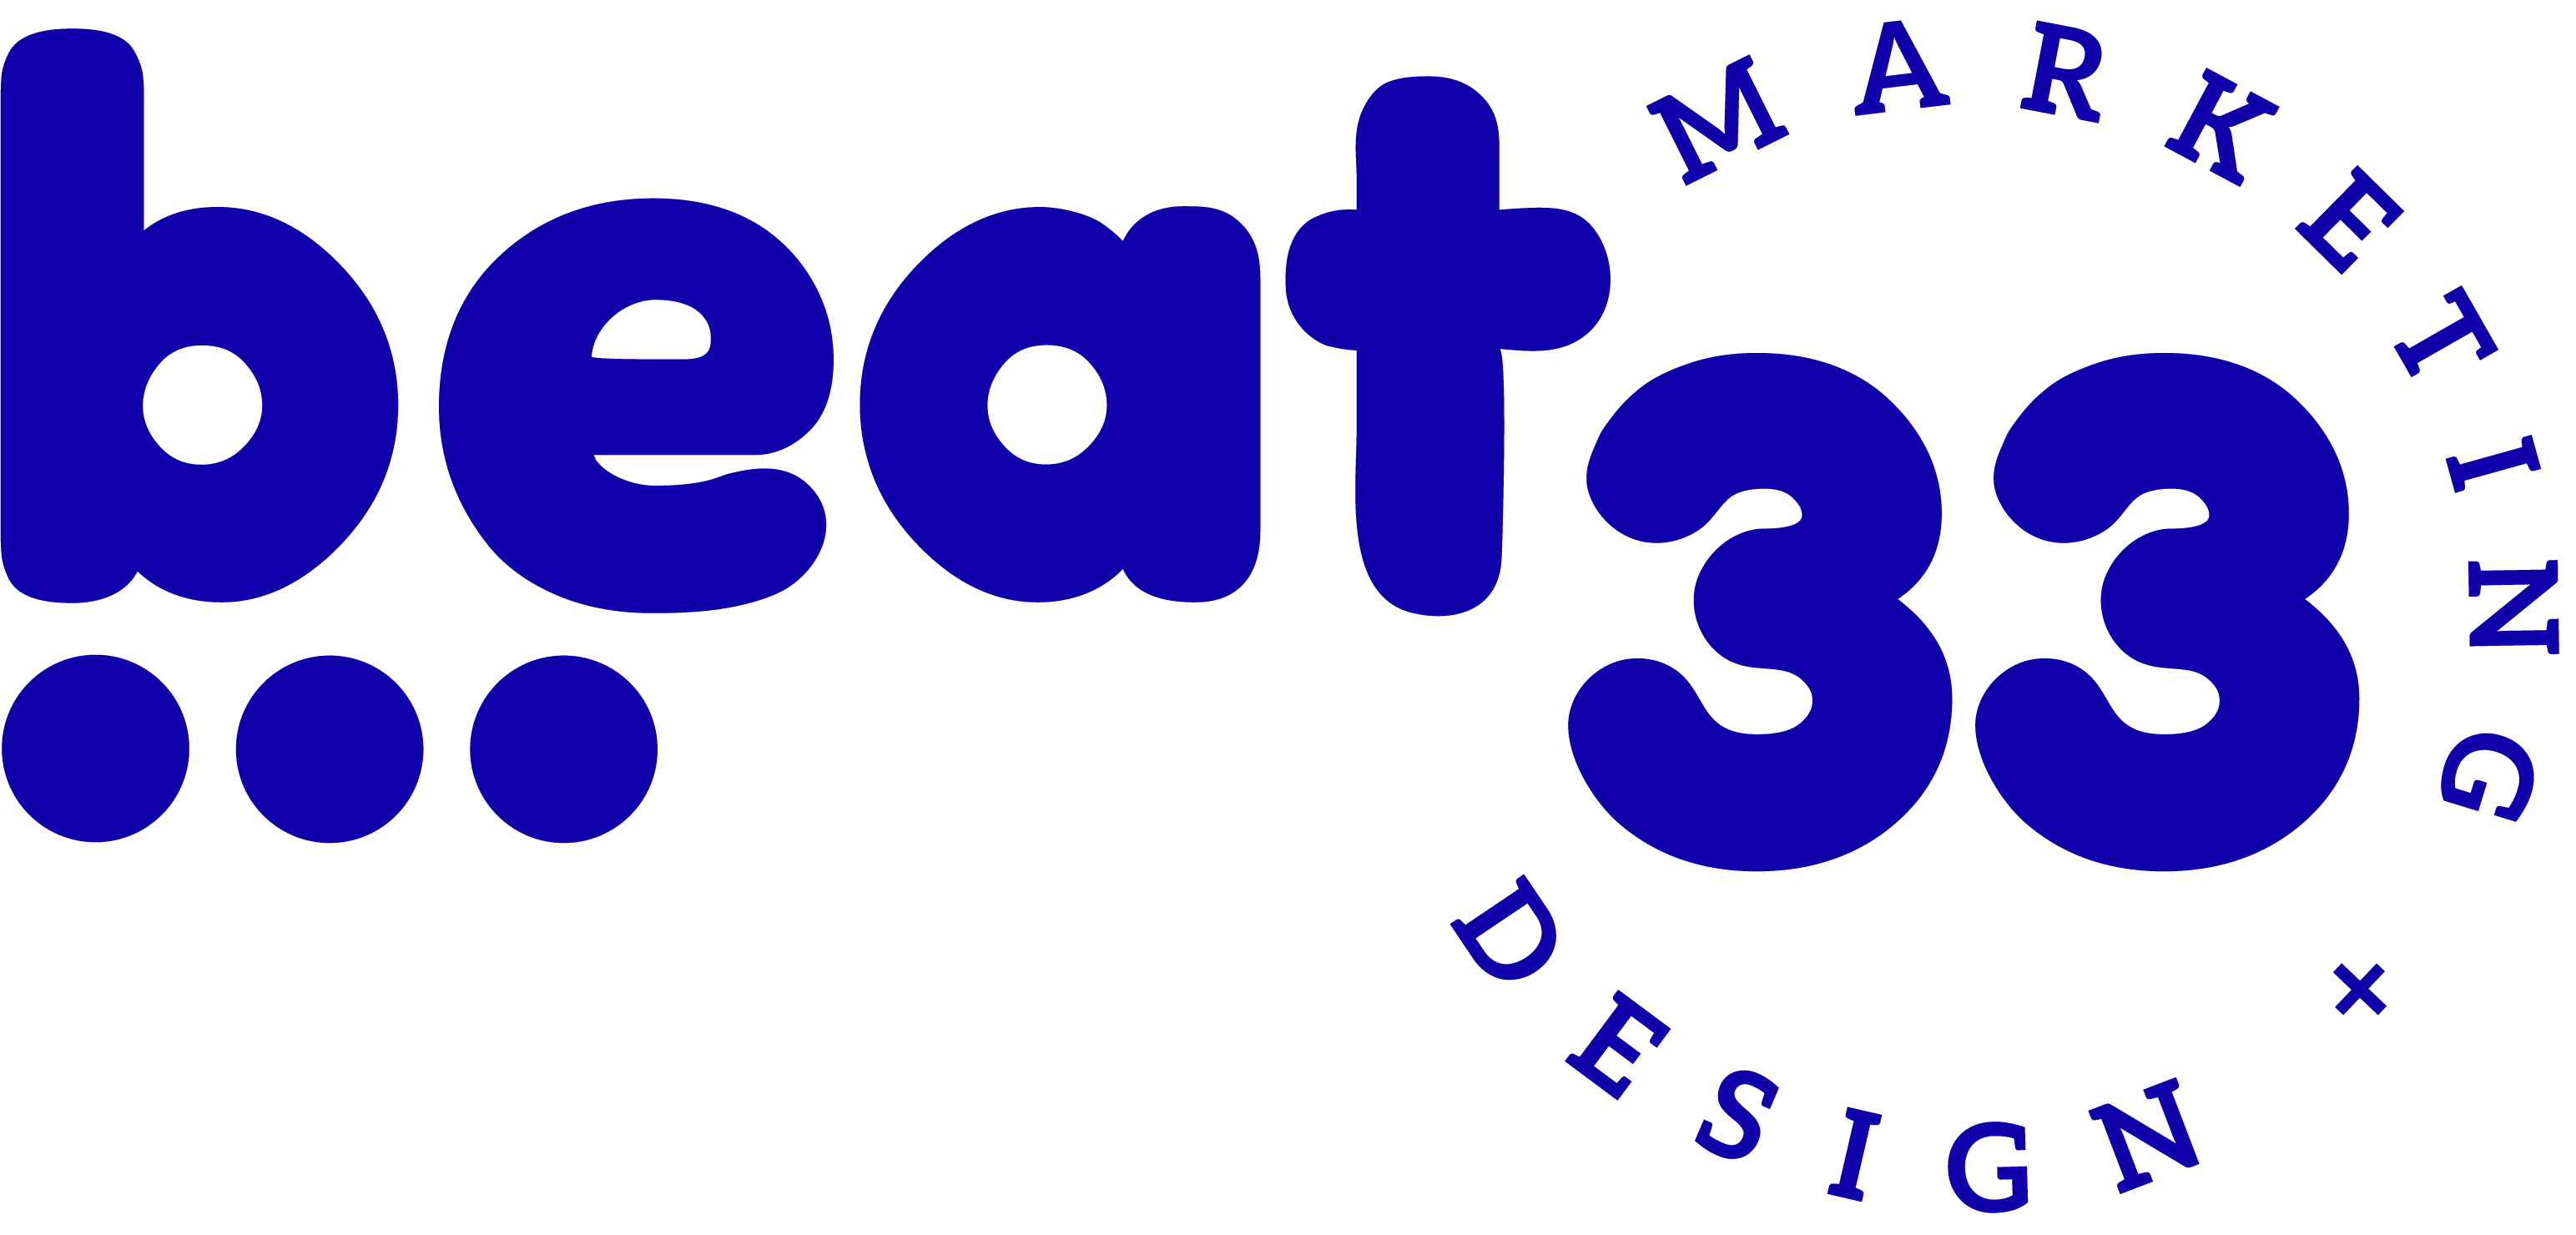 Beat33 Tucson – Marketing + Design